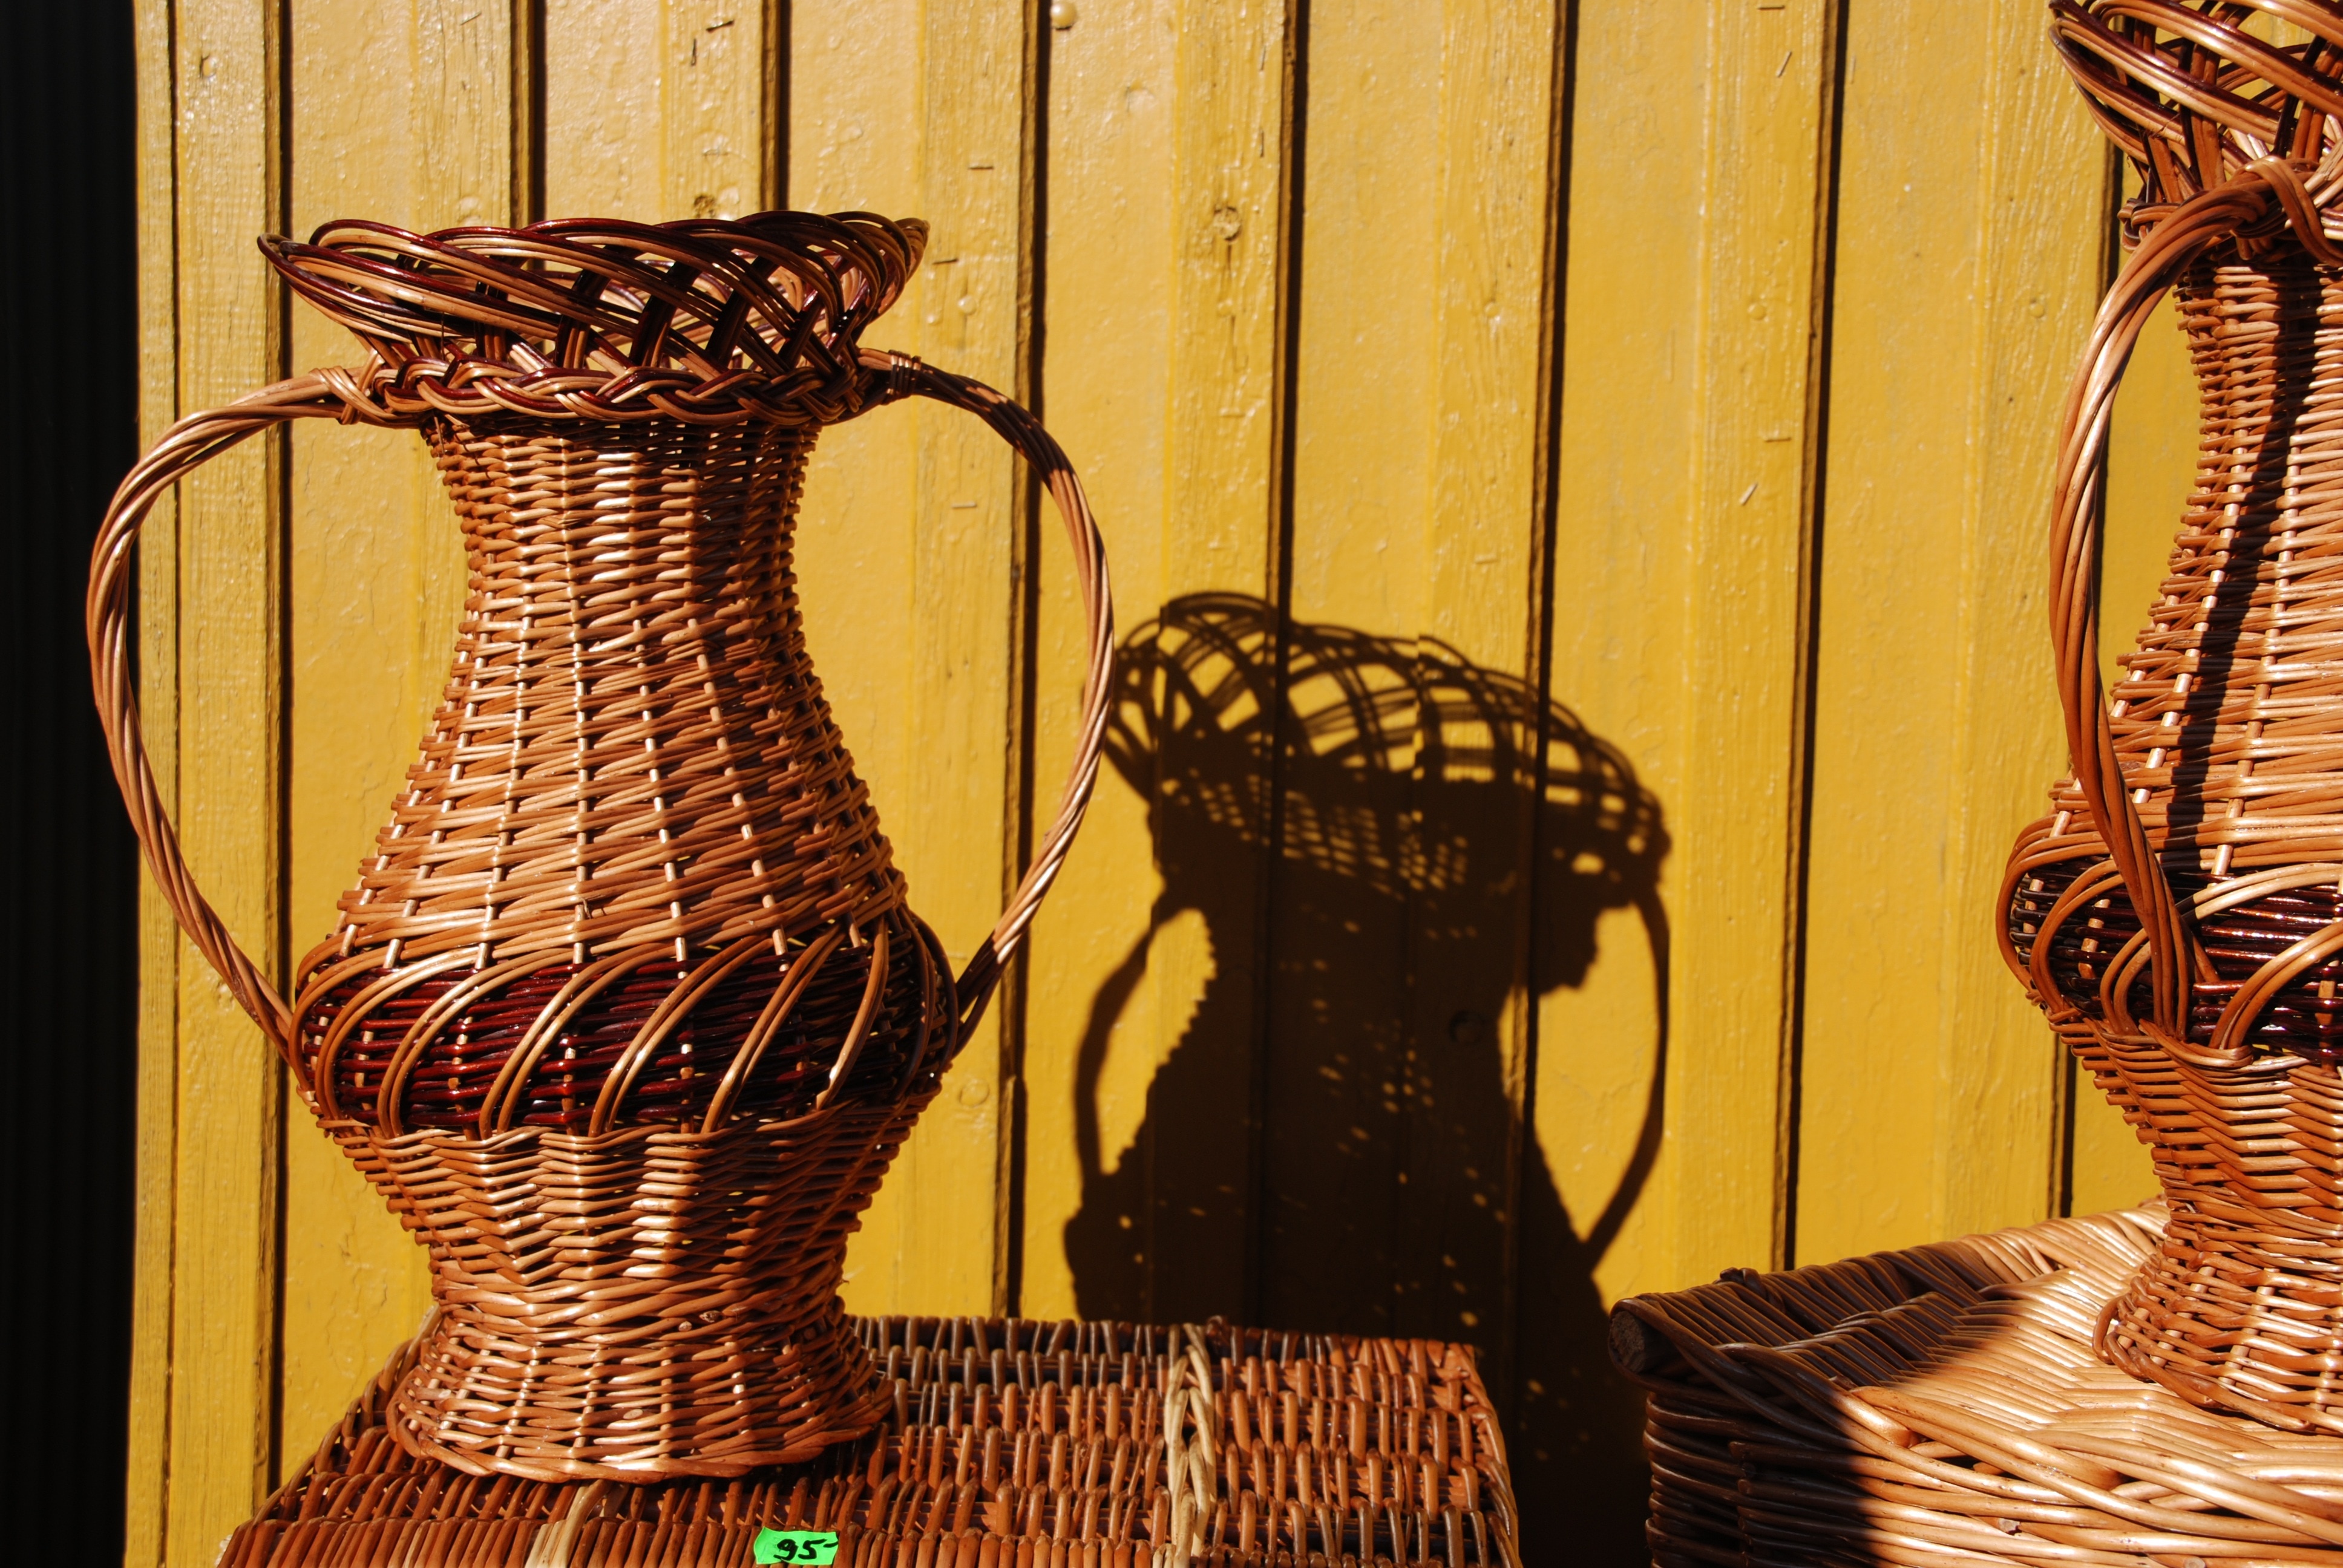 brown wicker vase